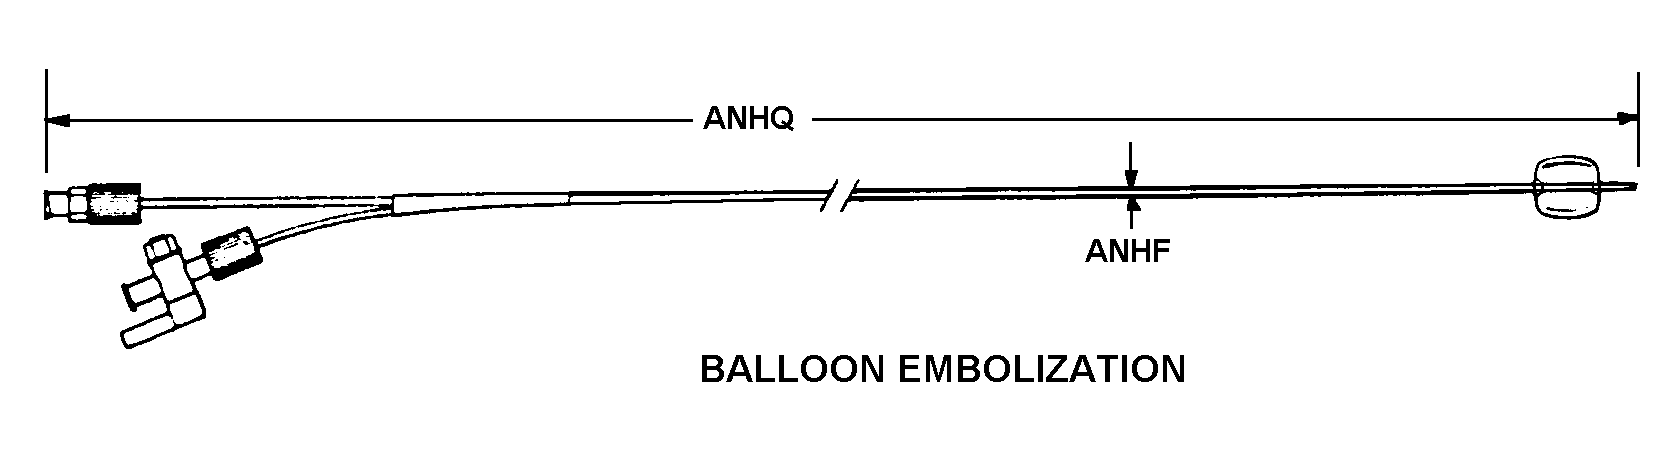 BALLOON EMBOLIZATION style nsn 6515-01-571-5671